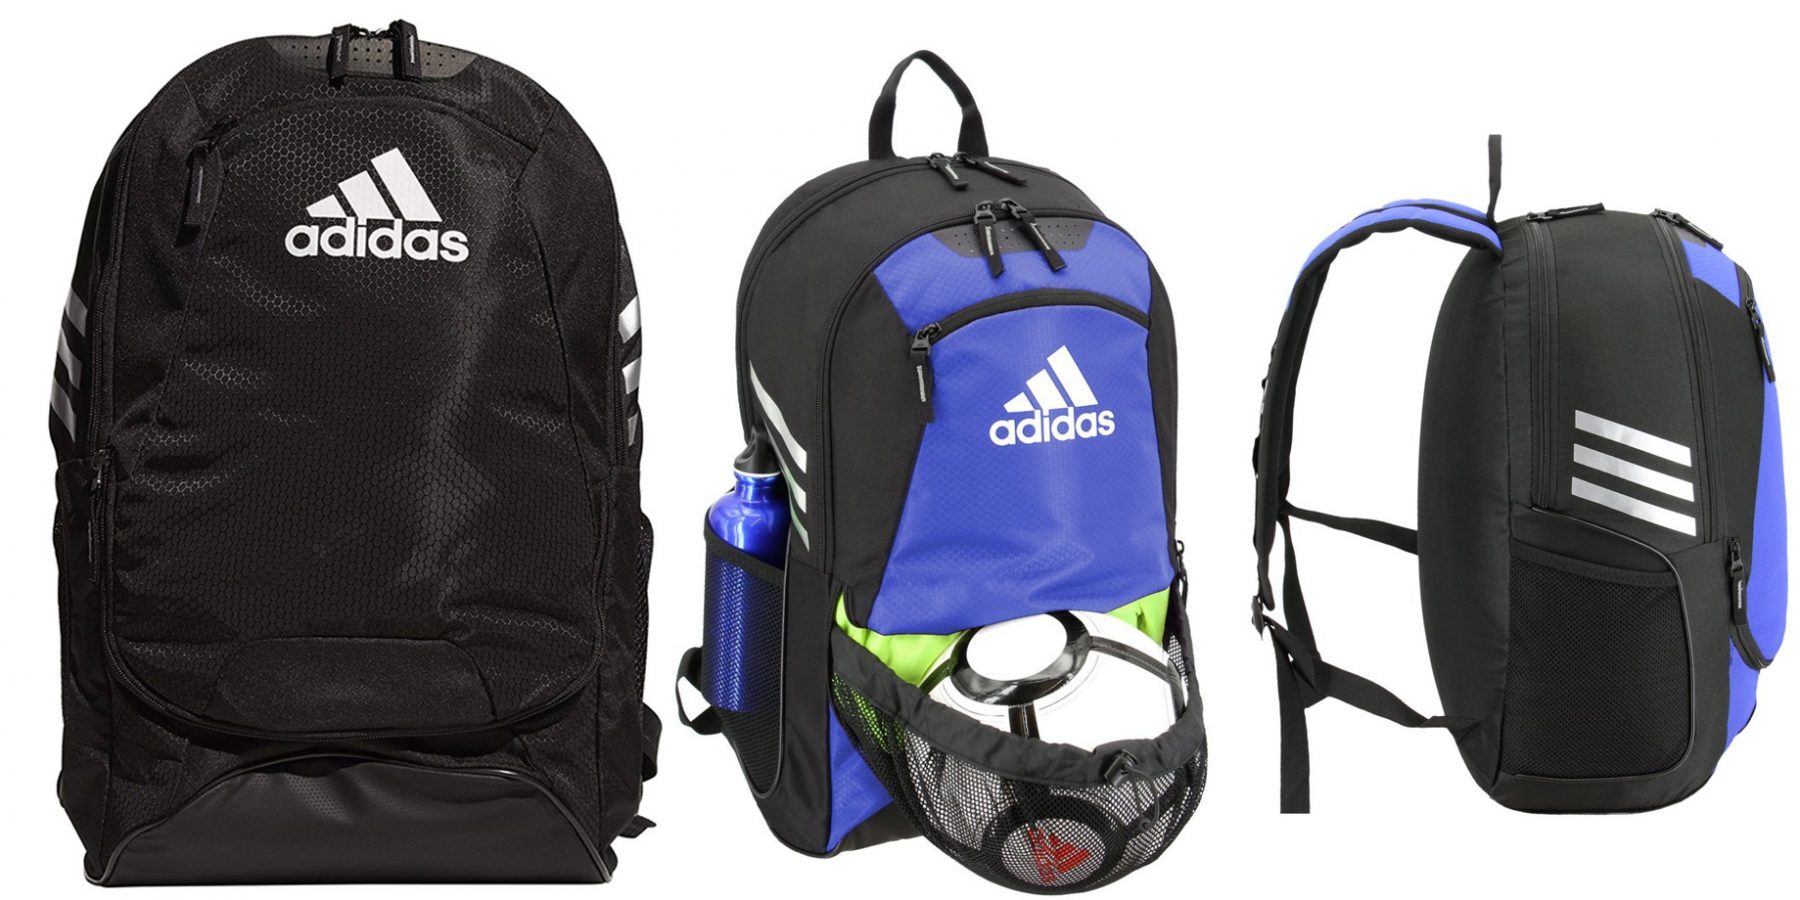 adidas stadium 2 soccer backpack